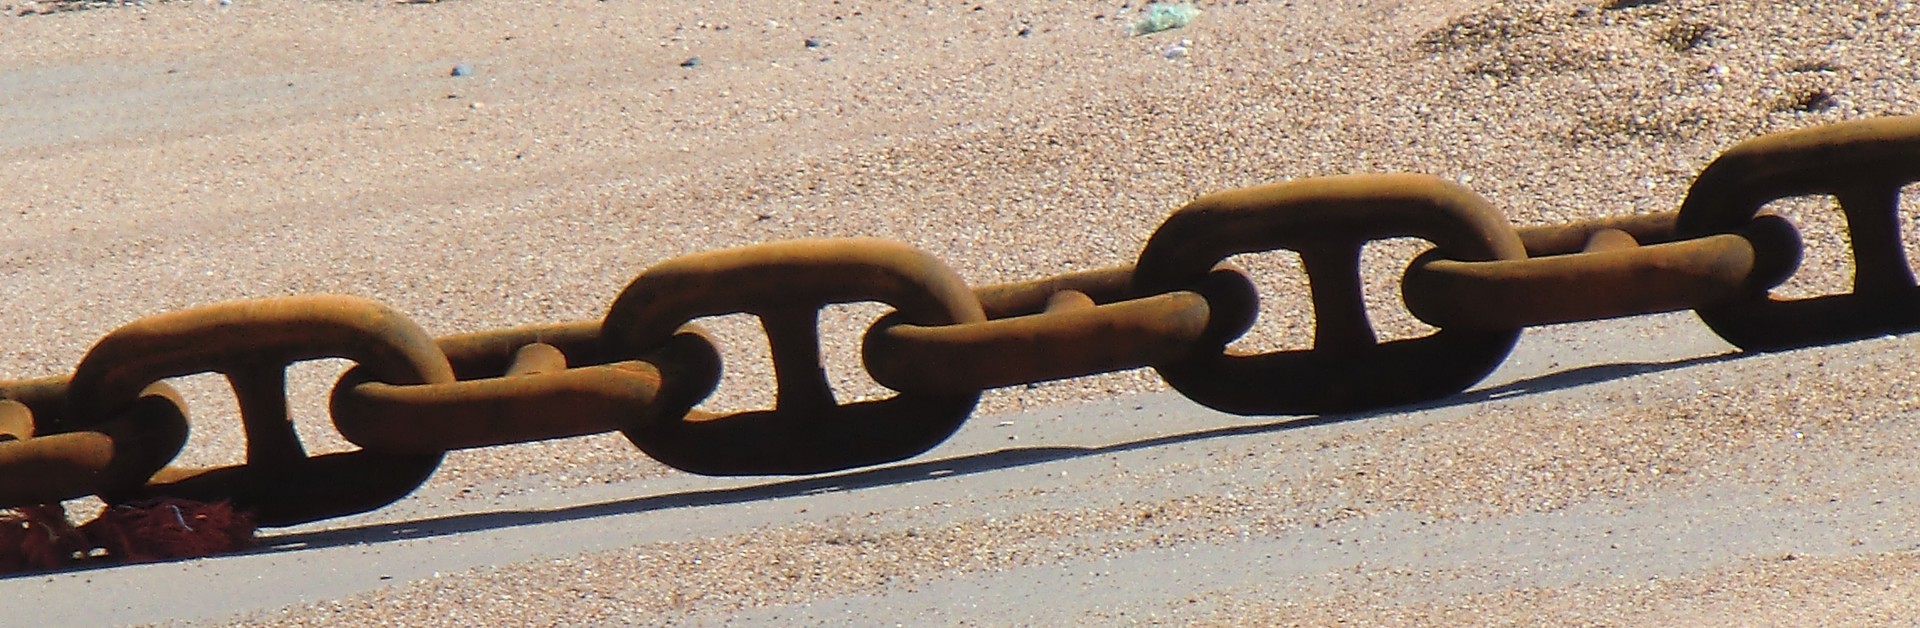 chain rust beach free photo